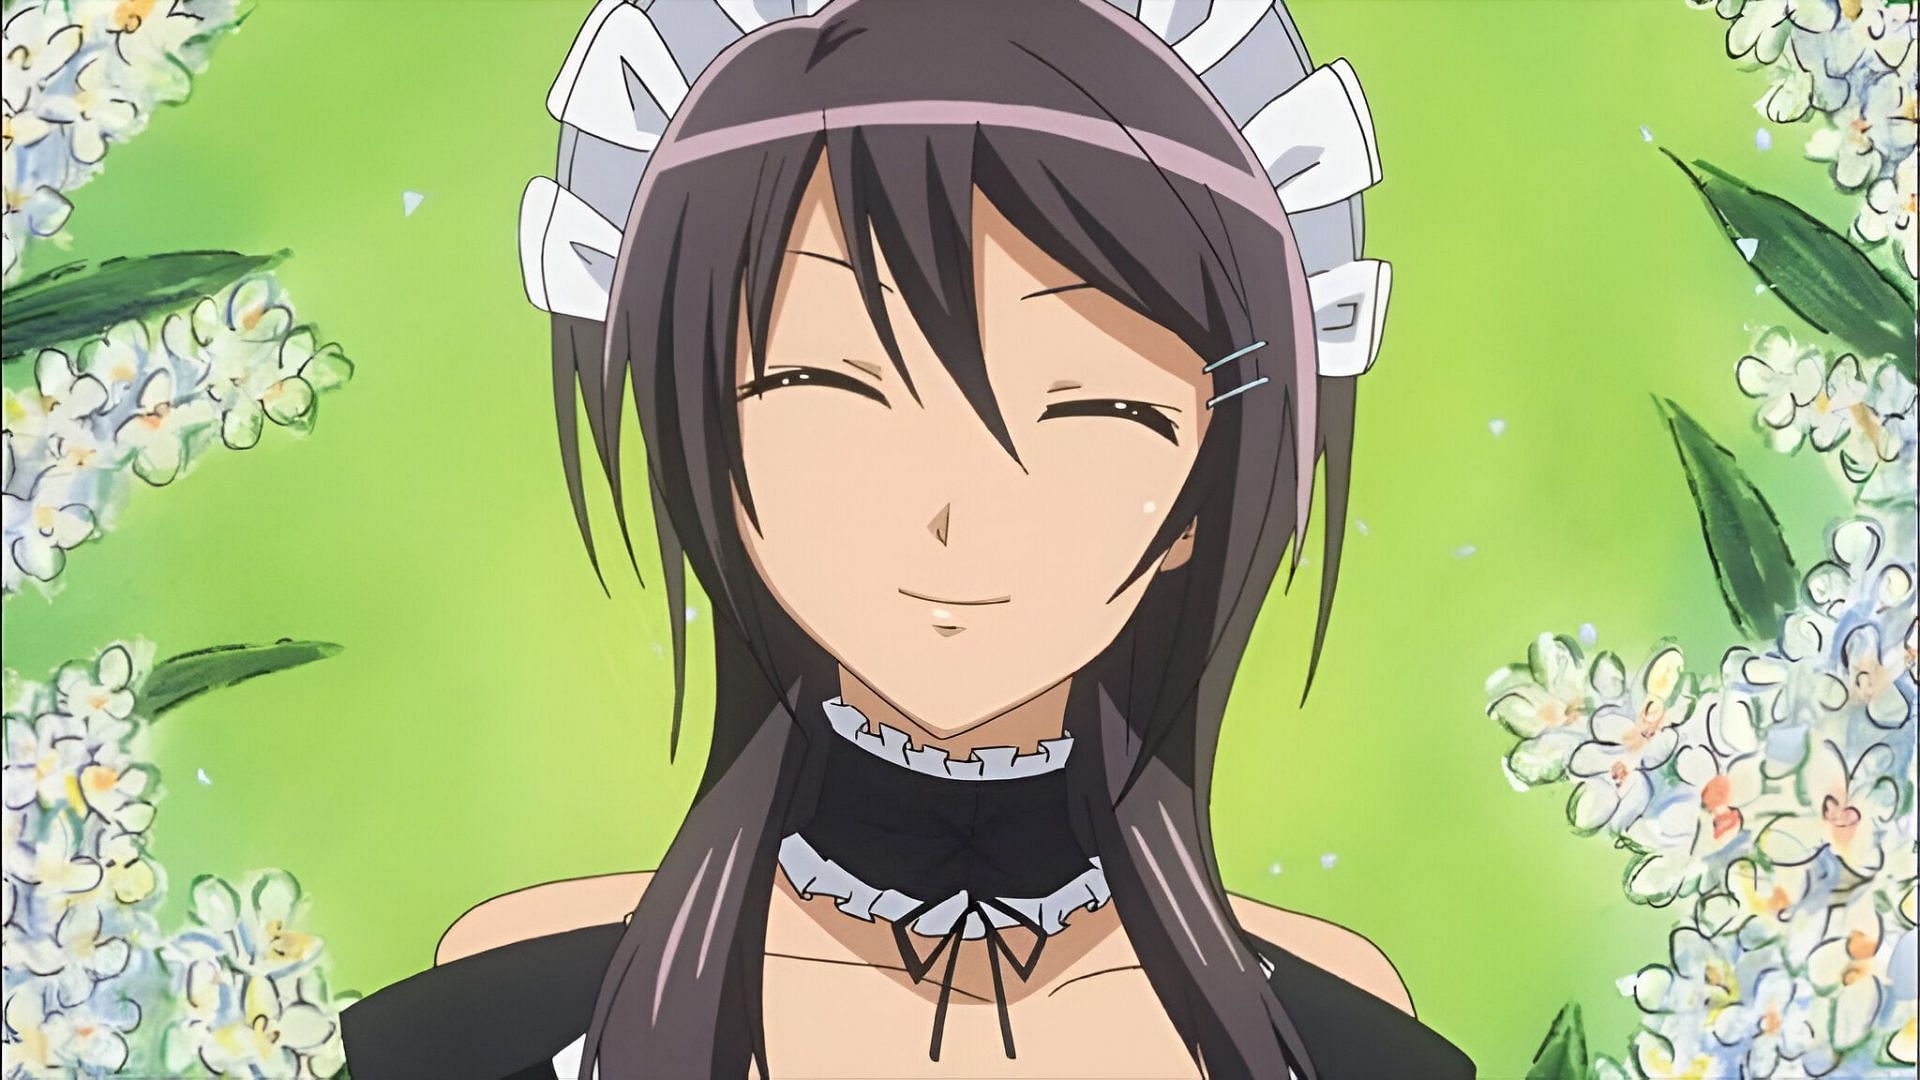 Misaki as seen in the anime (Image via J.C. Staff)